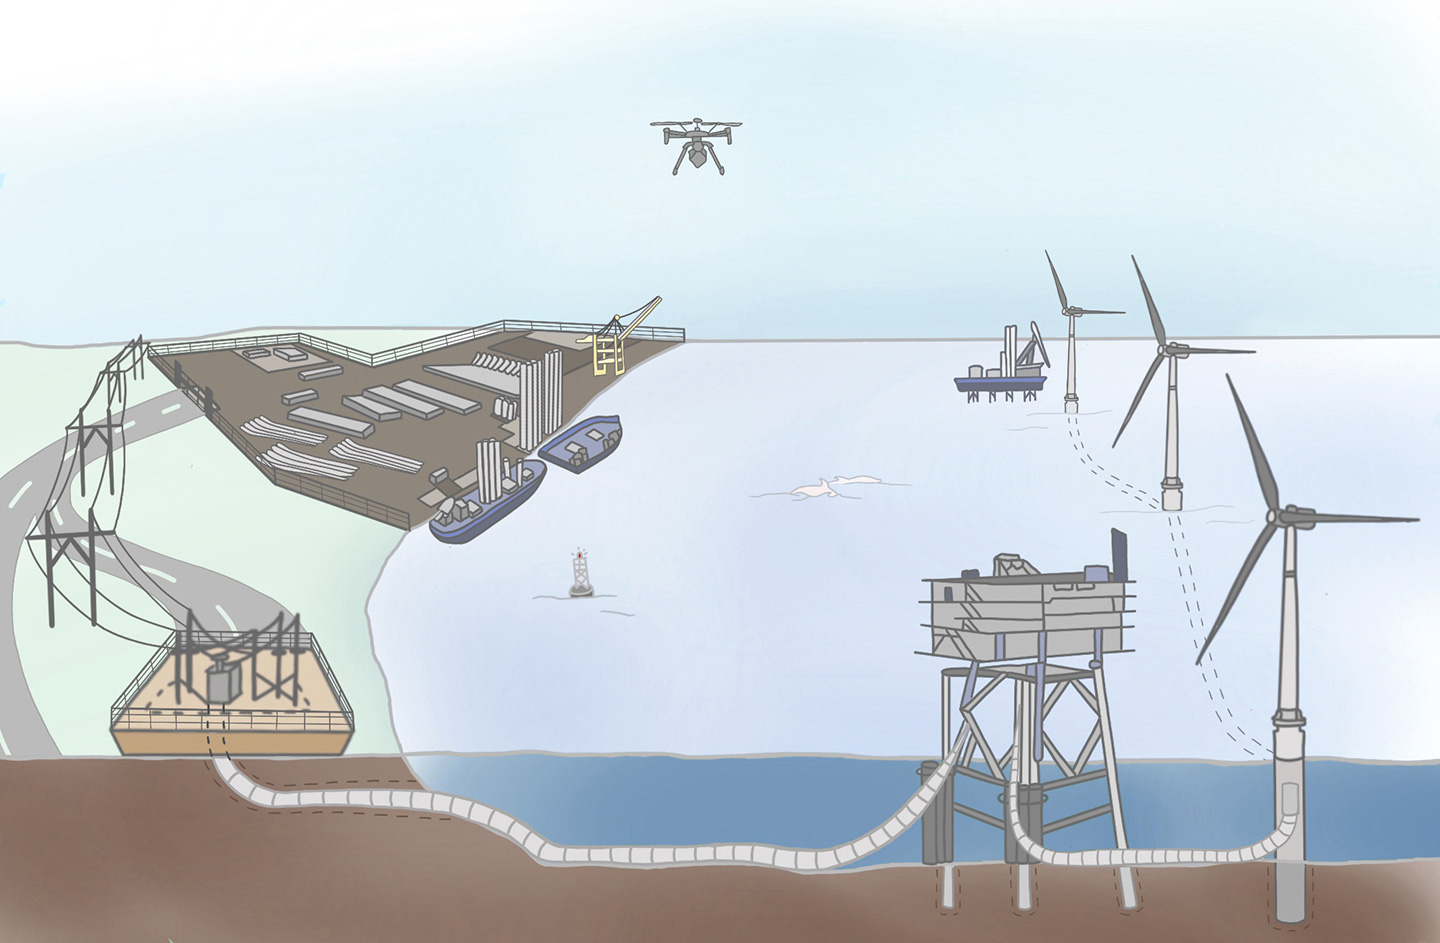 Offshore wind system illustration.